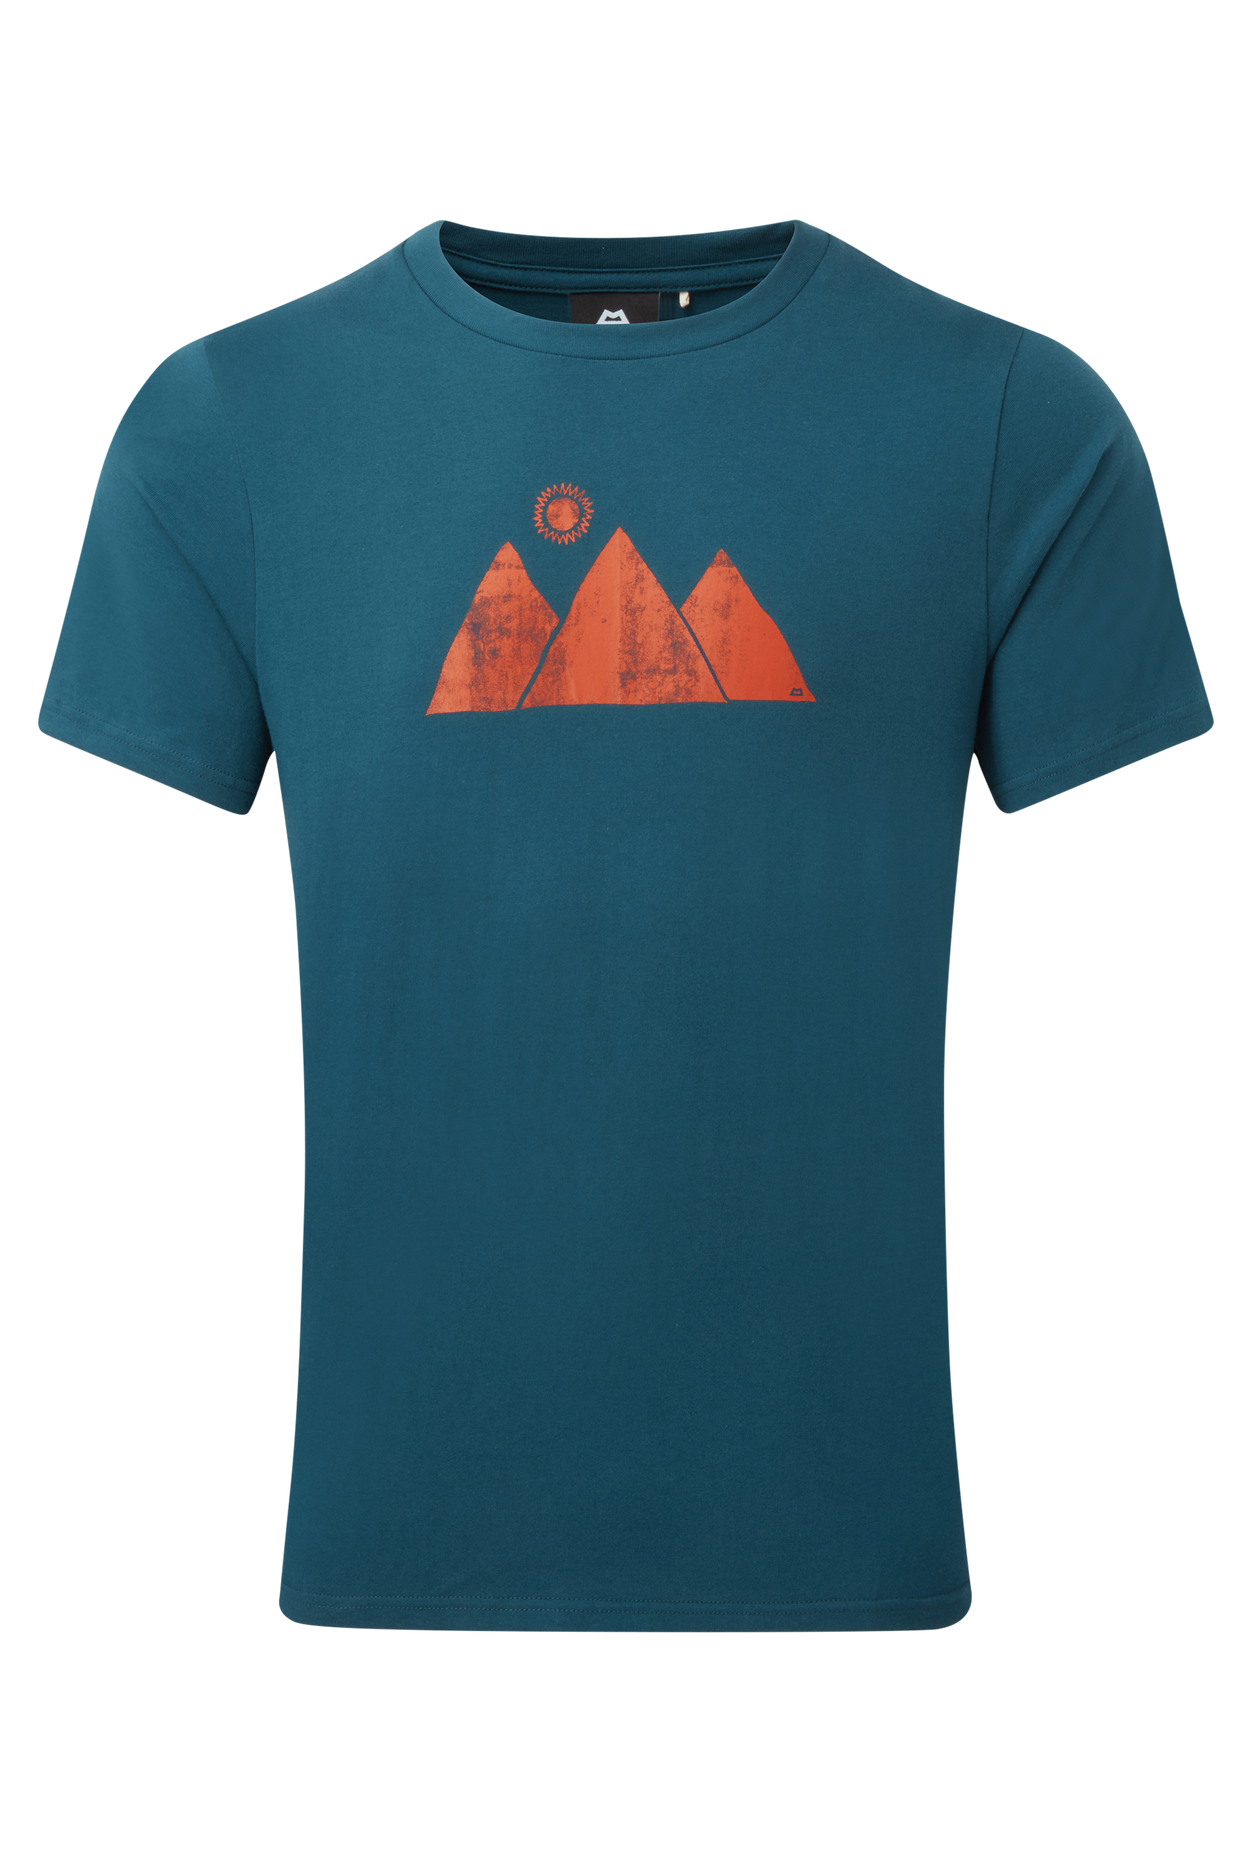 Mountain equipment pánské triko Mountain Sun Mens Tee Barva: Majolica Blue, Velikost: S